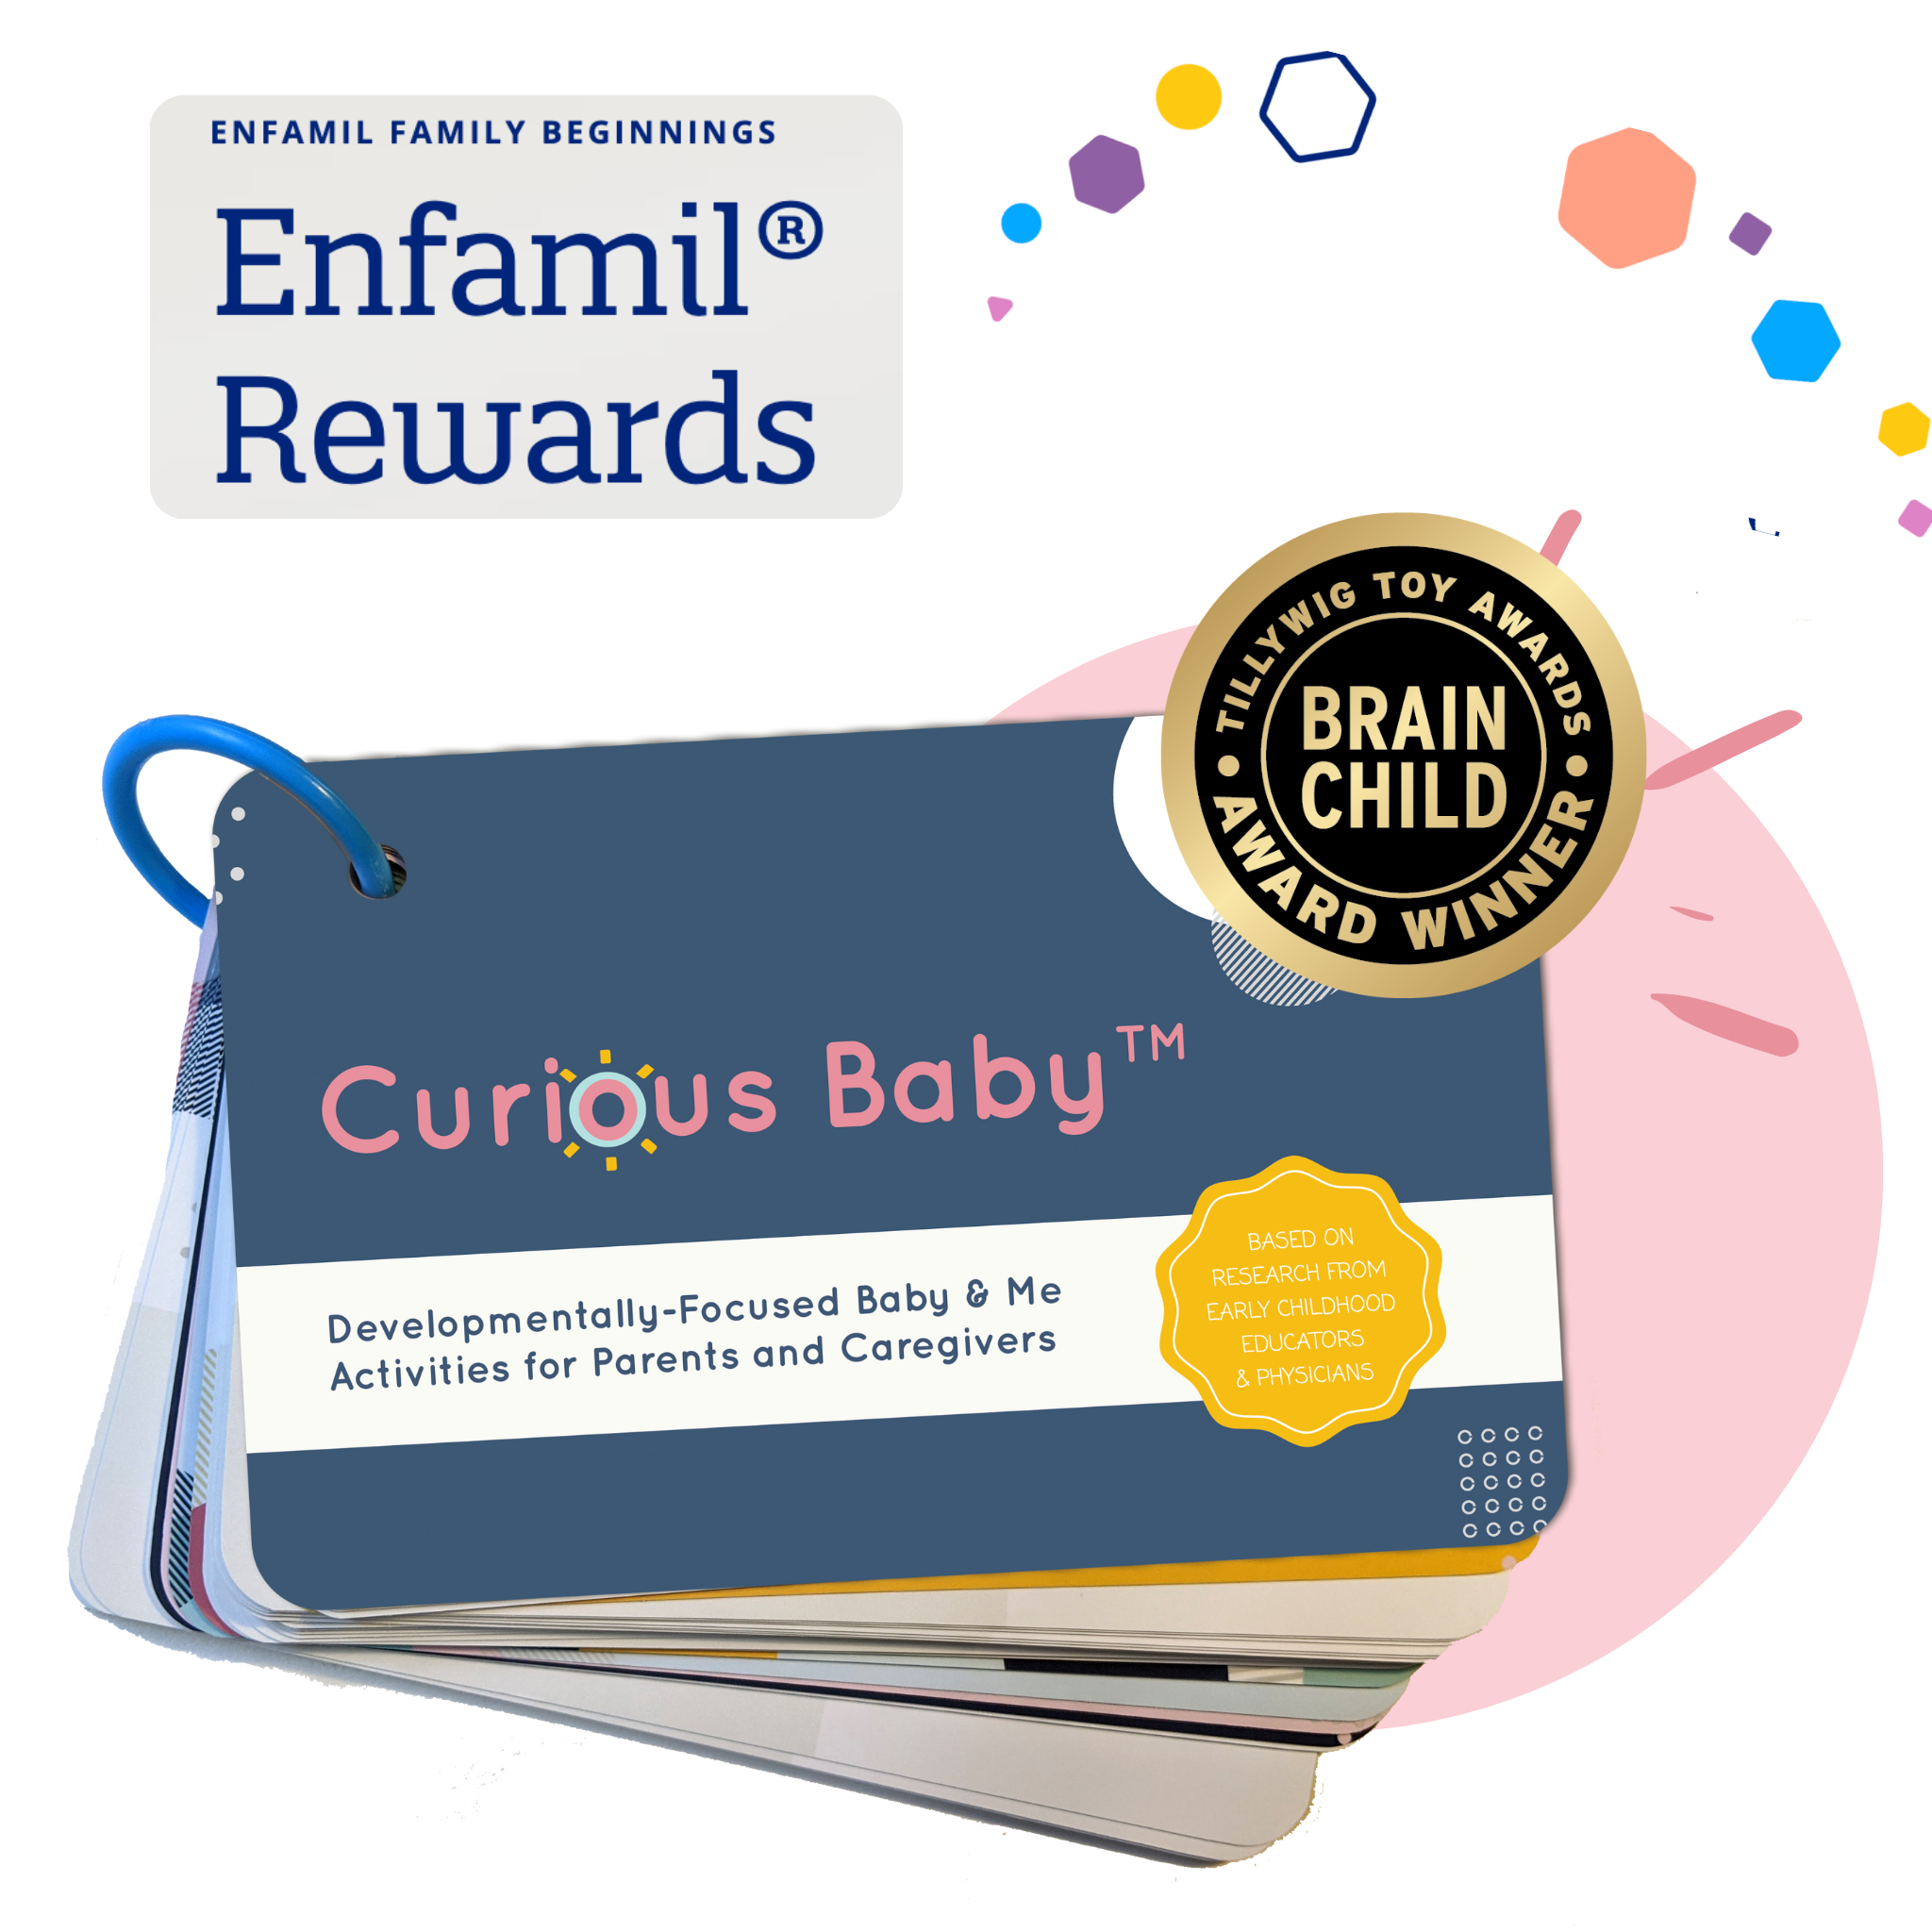 Baby product rewards